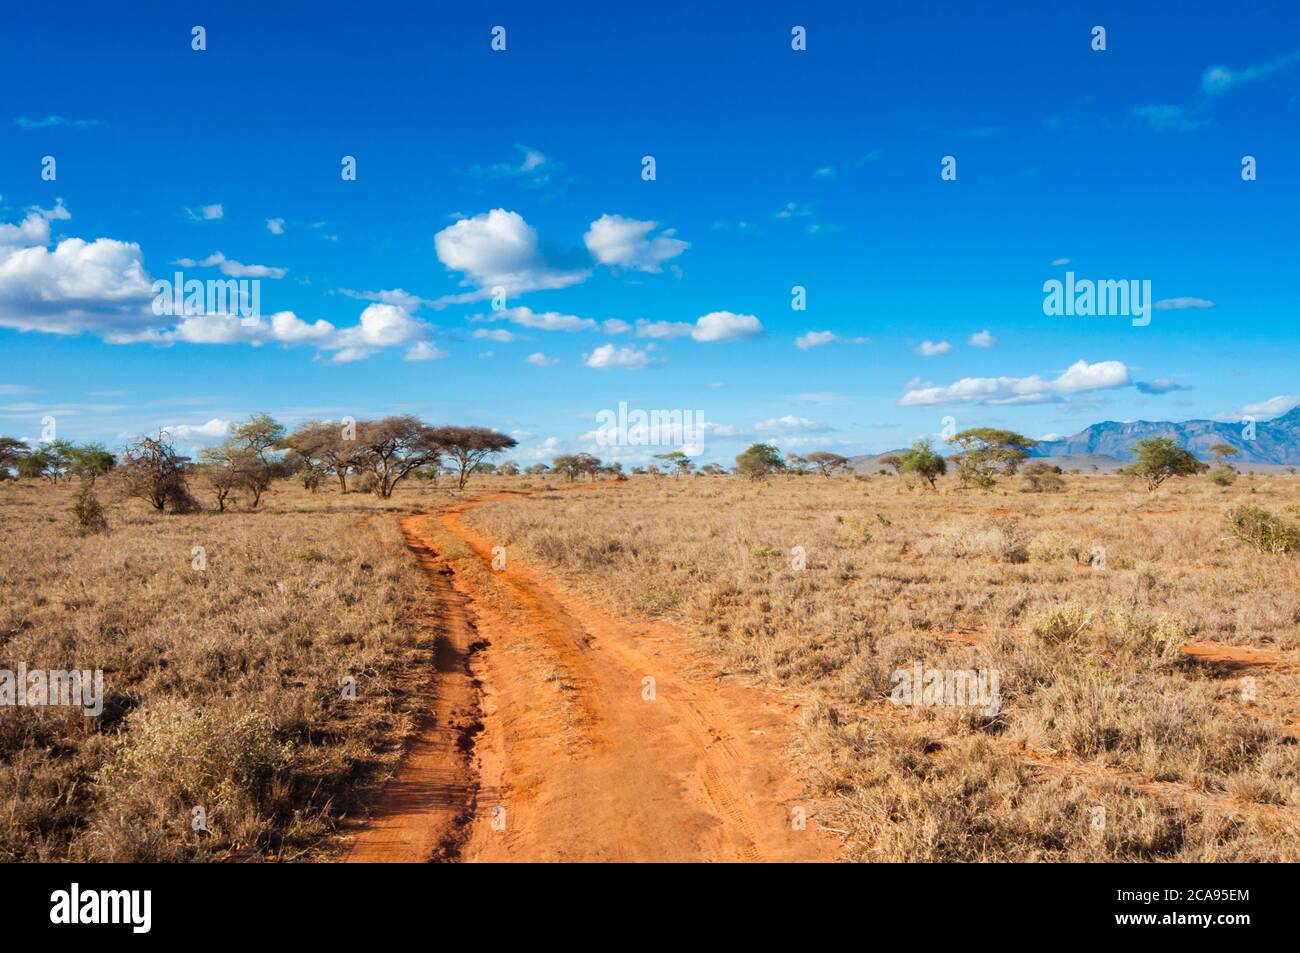 Trail in the Savannah, Taita Hills Wildlife Sanctuary, Kenya, East Africa, Africa Stock Photo